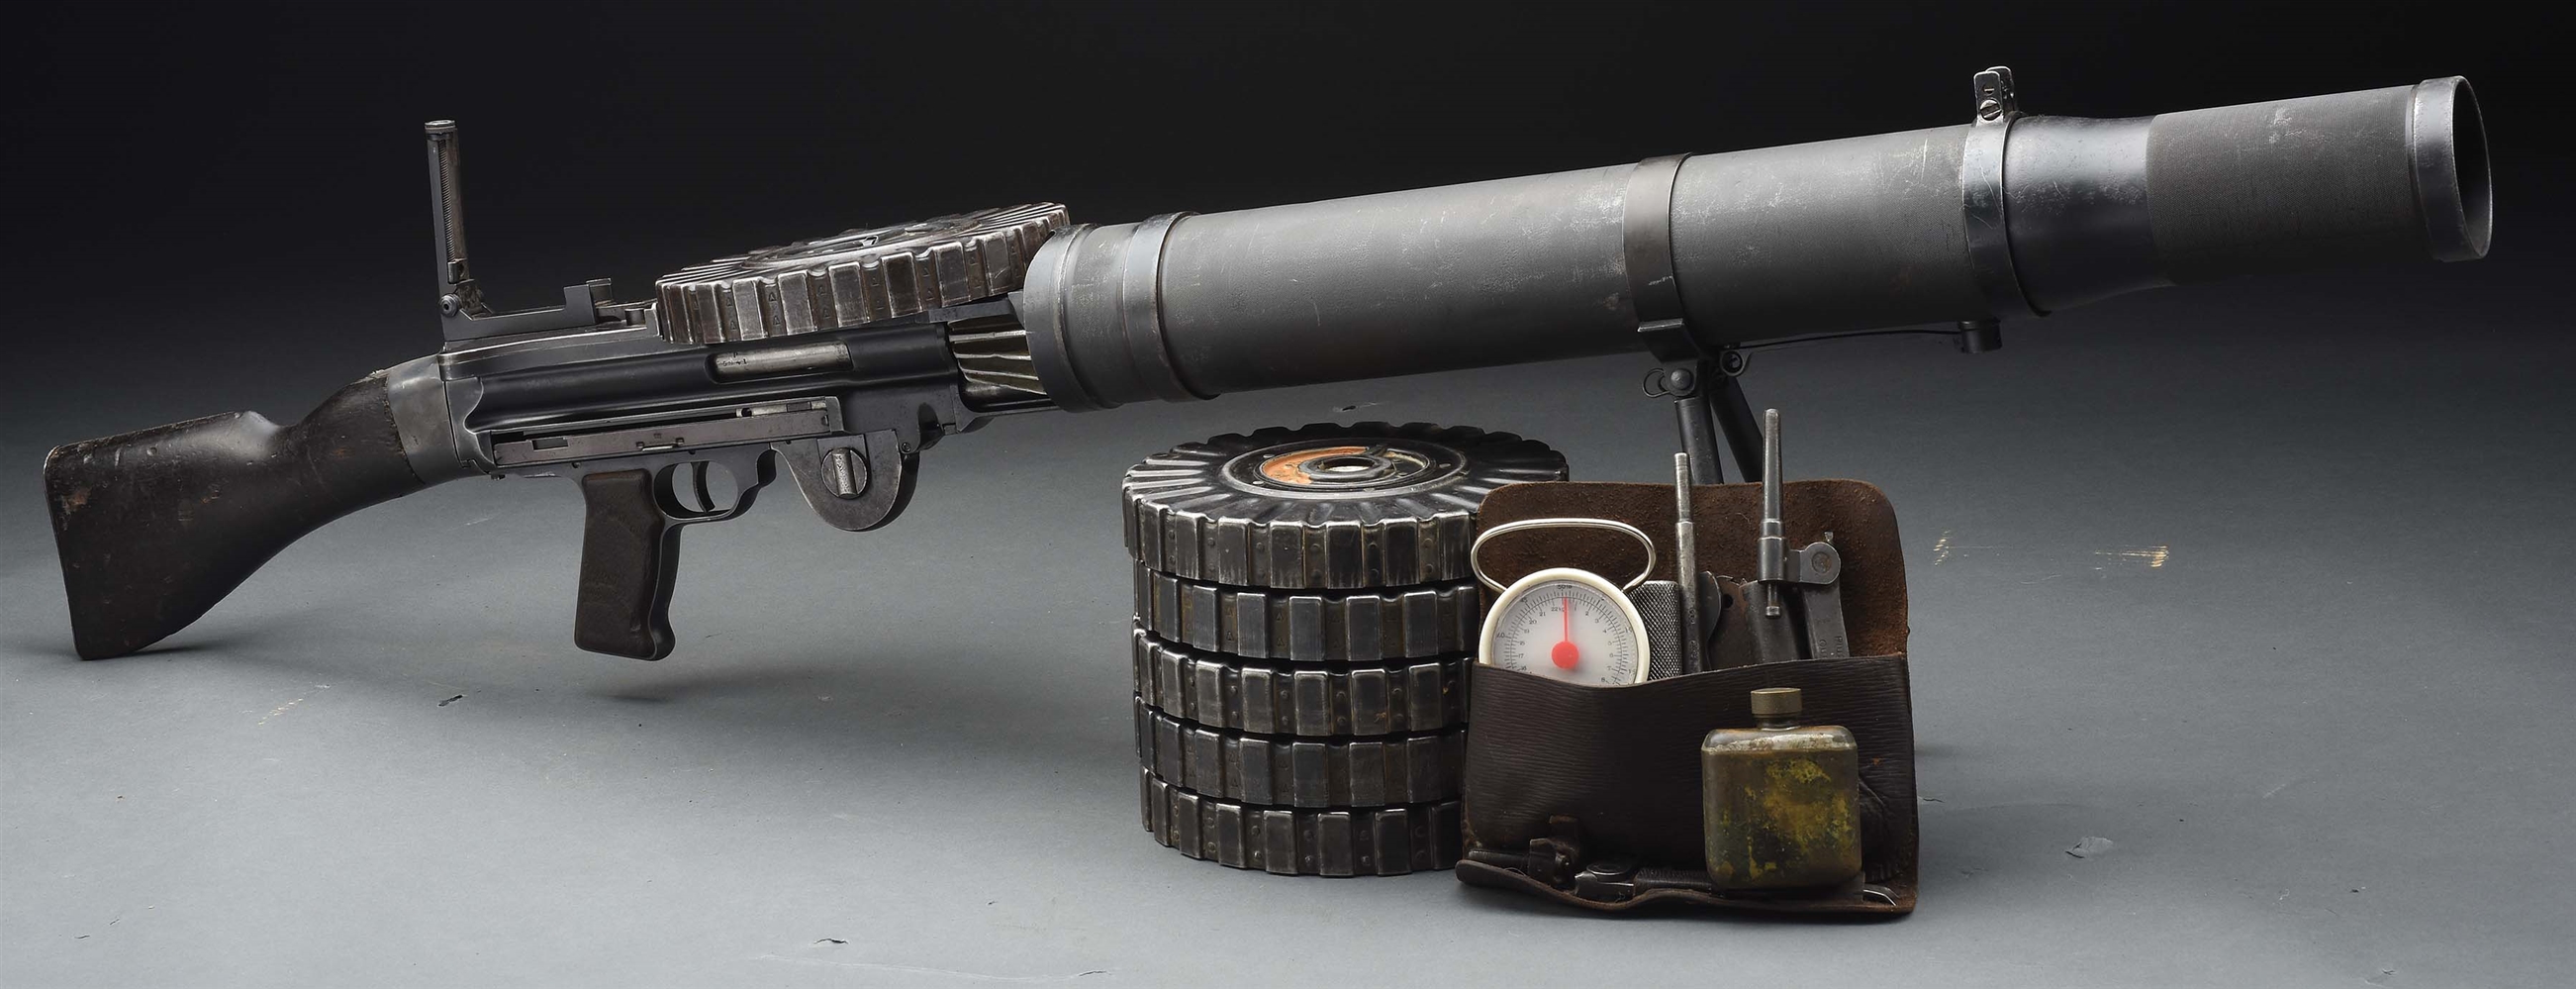 (N) RARE AND DESIRABLE SAVAGE LEWIS MODEL 1914 MACHINE GUN (CURIO AND RELIC).